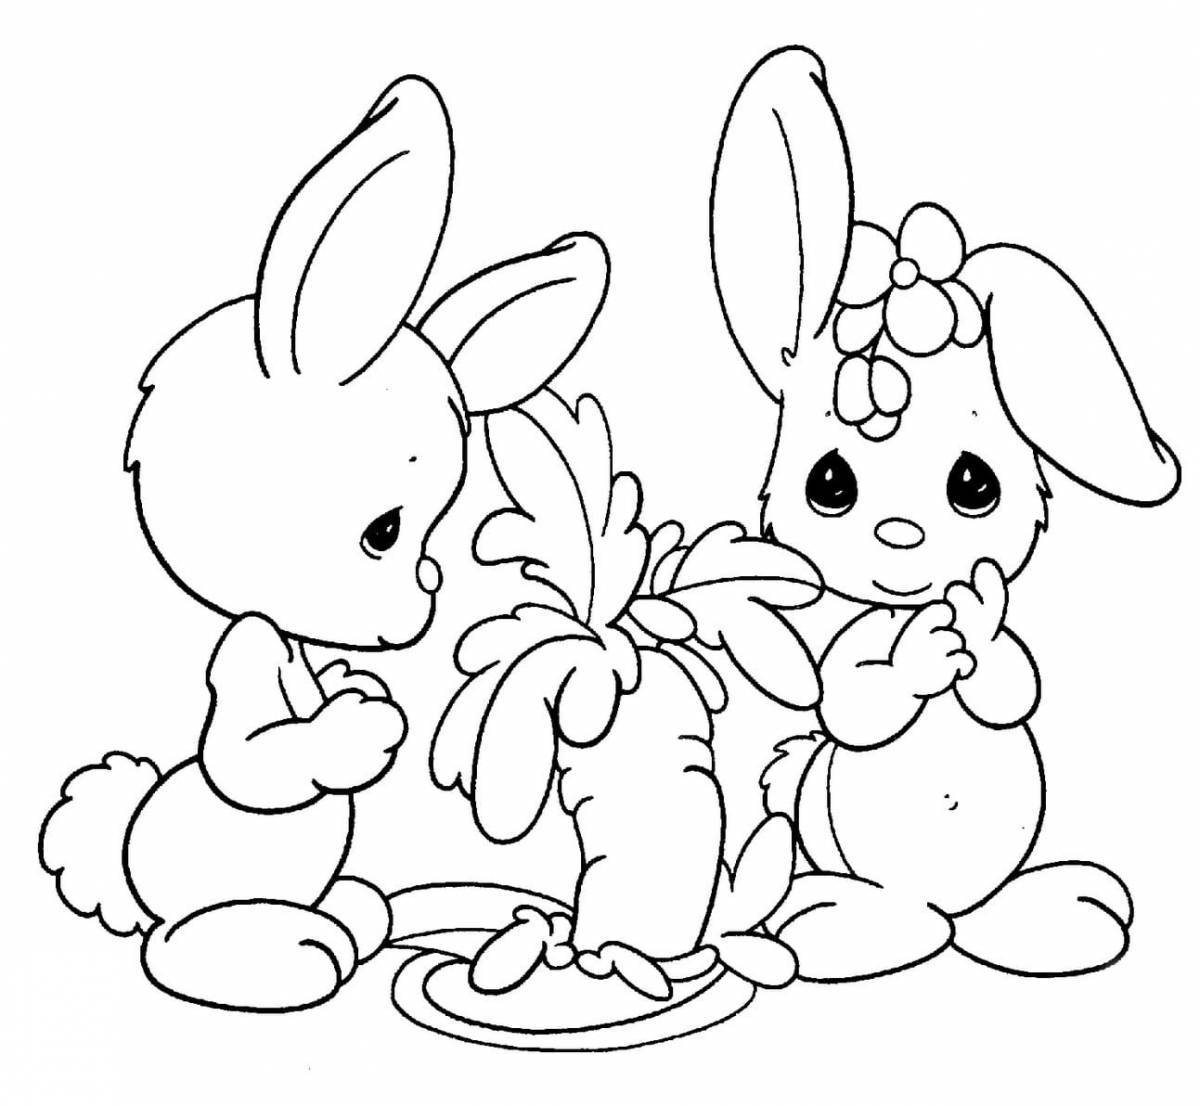 Нечеткая раскраска page bunny picture